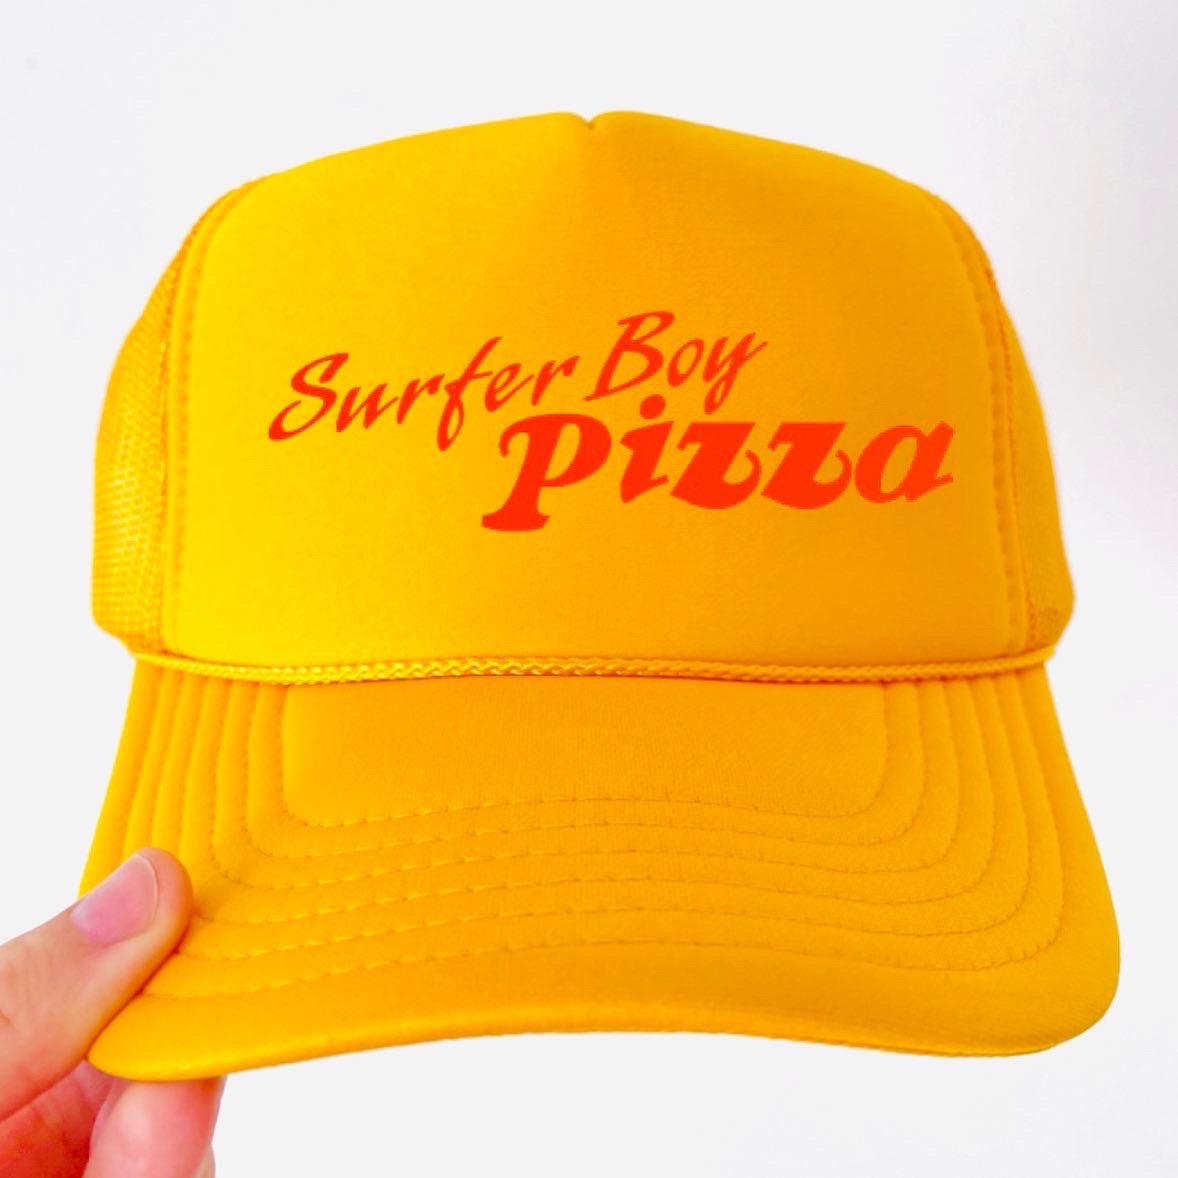 Surfer boy Pizza